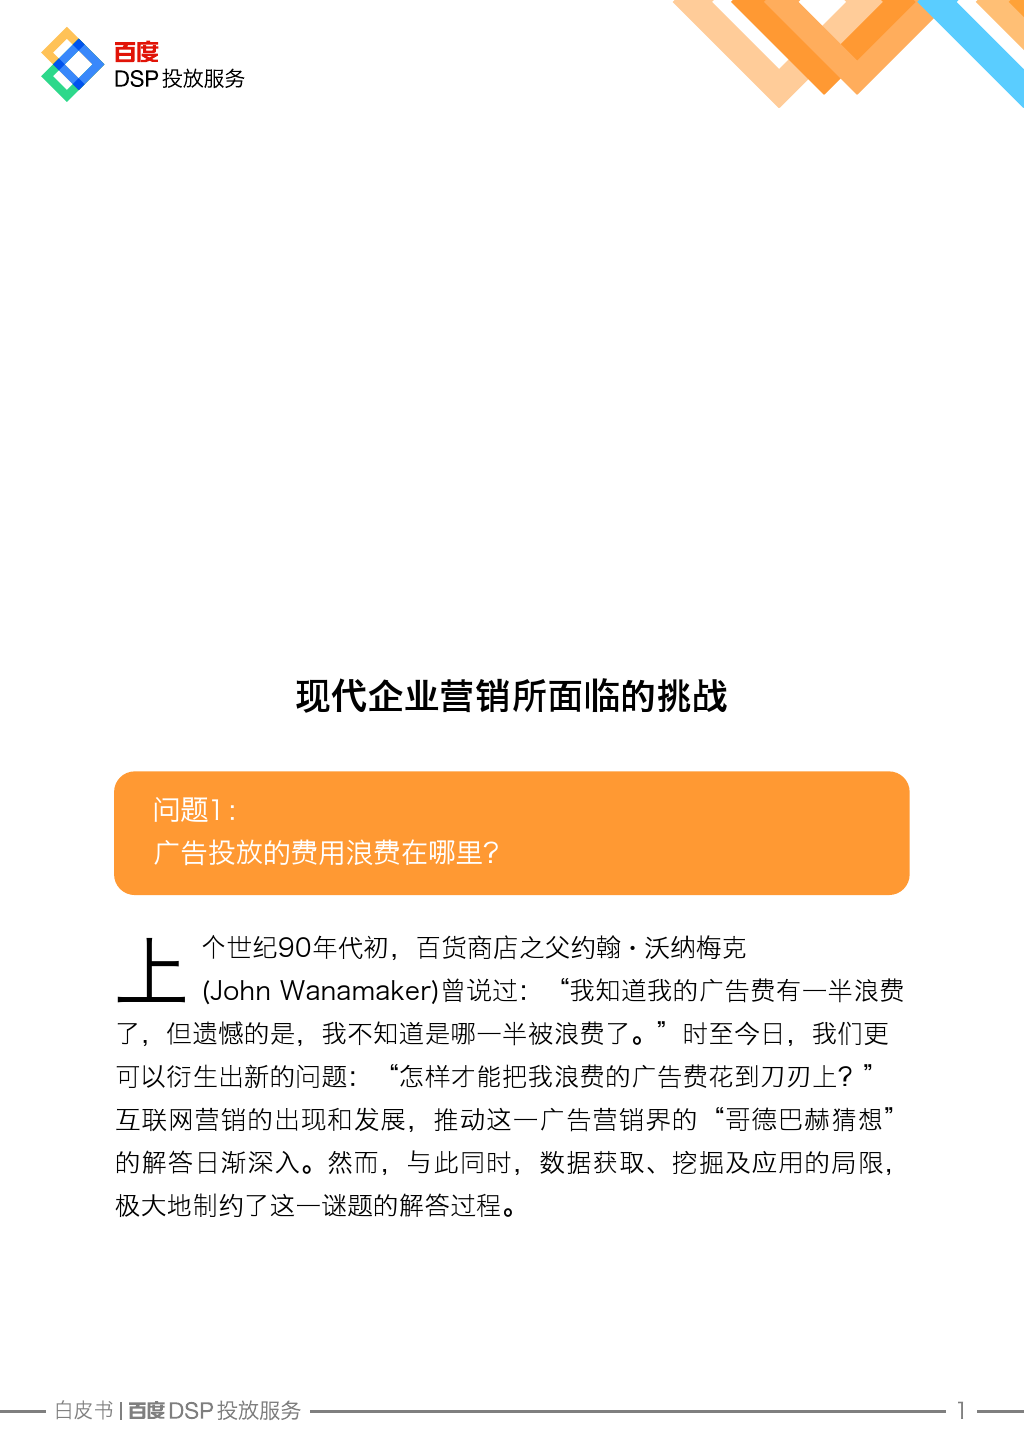 Baidu DSP Service White Paper_000002